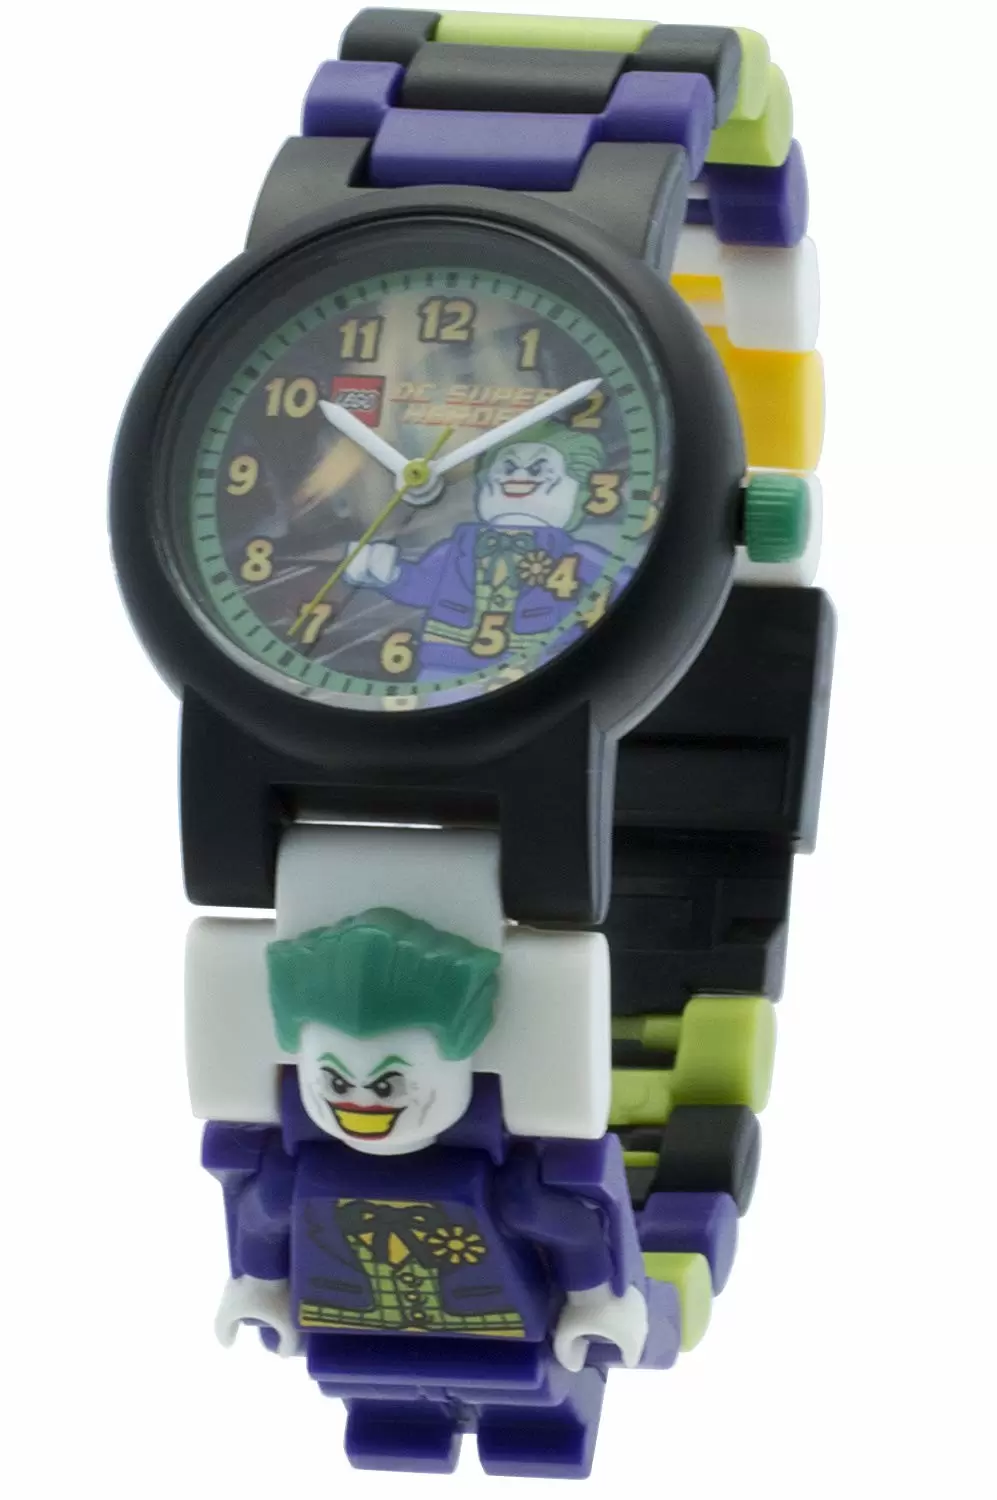 LEGO Watches - LEGO DC Comics Super Heroes Watch - Joker